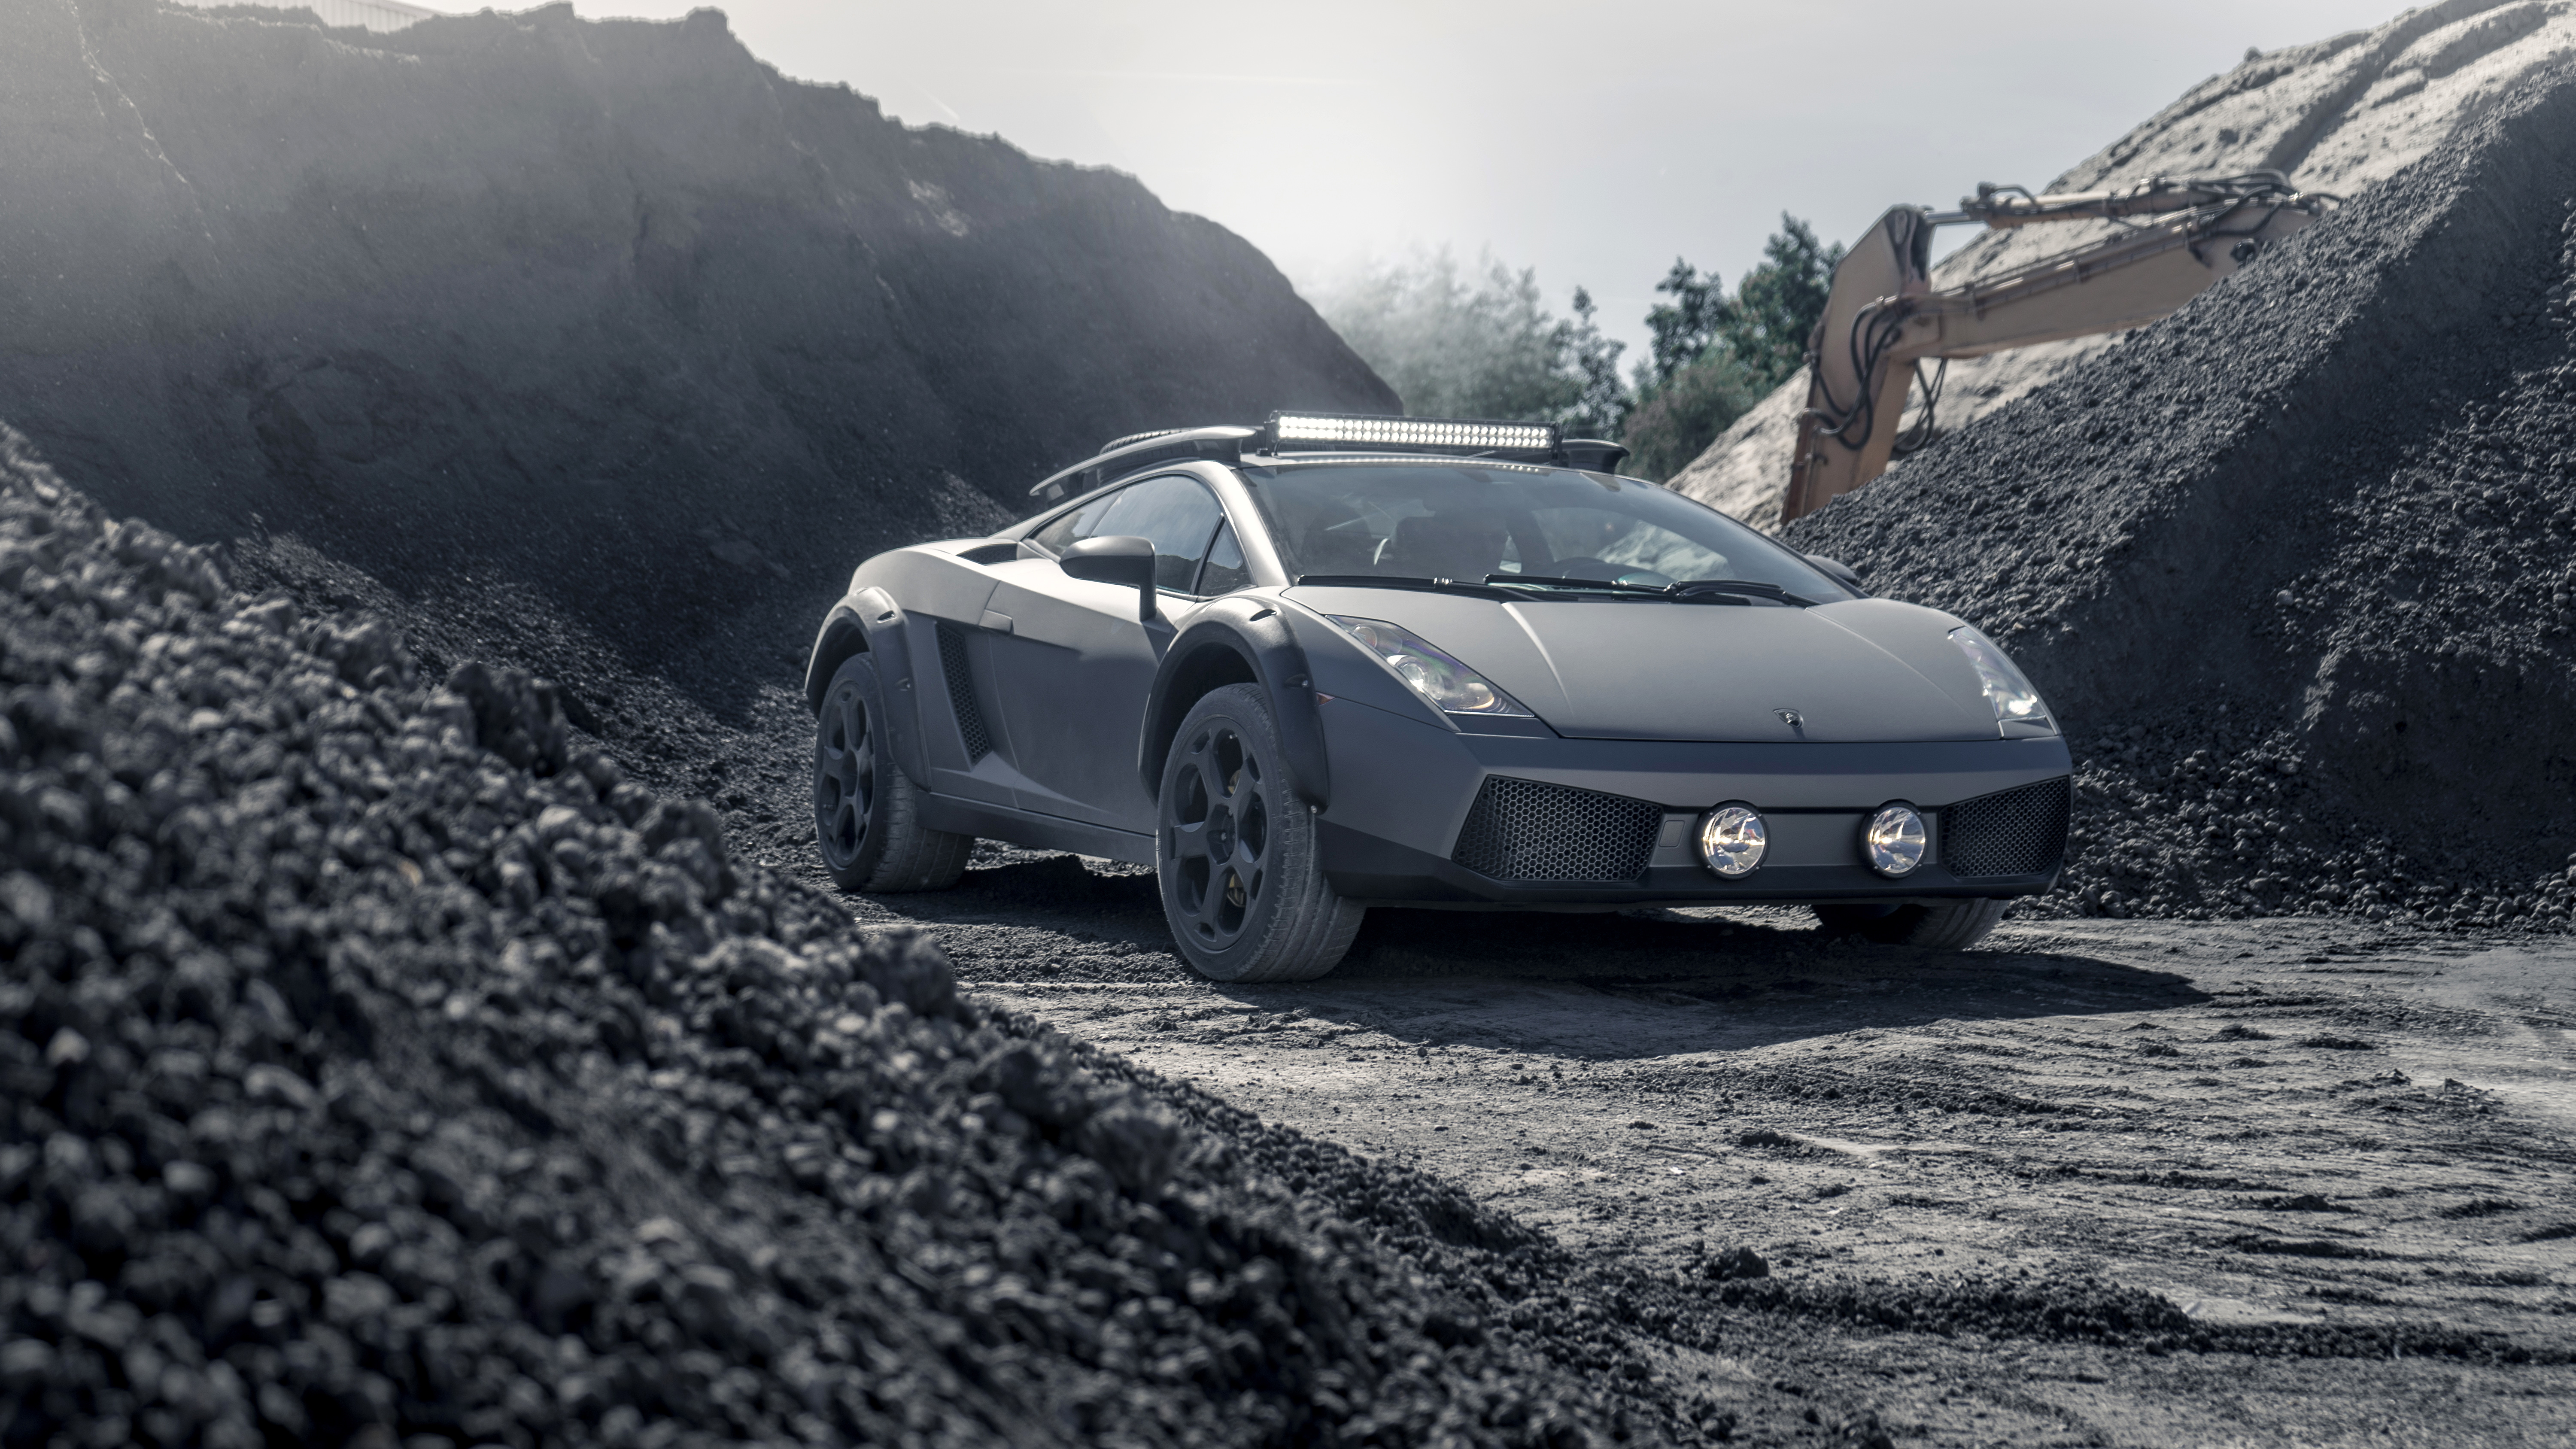 Lamborghini Gallardo Offroad 2019 4K 2 Wallpaper | HD Car Wallpapers